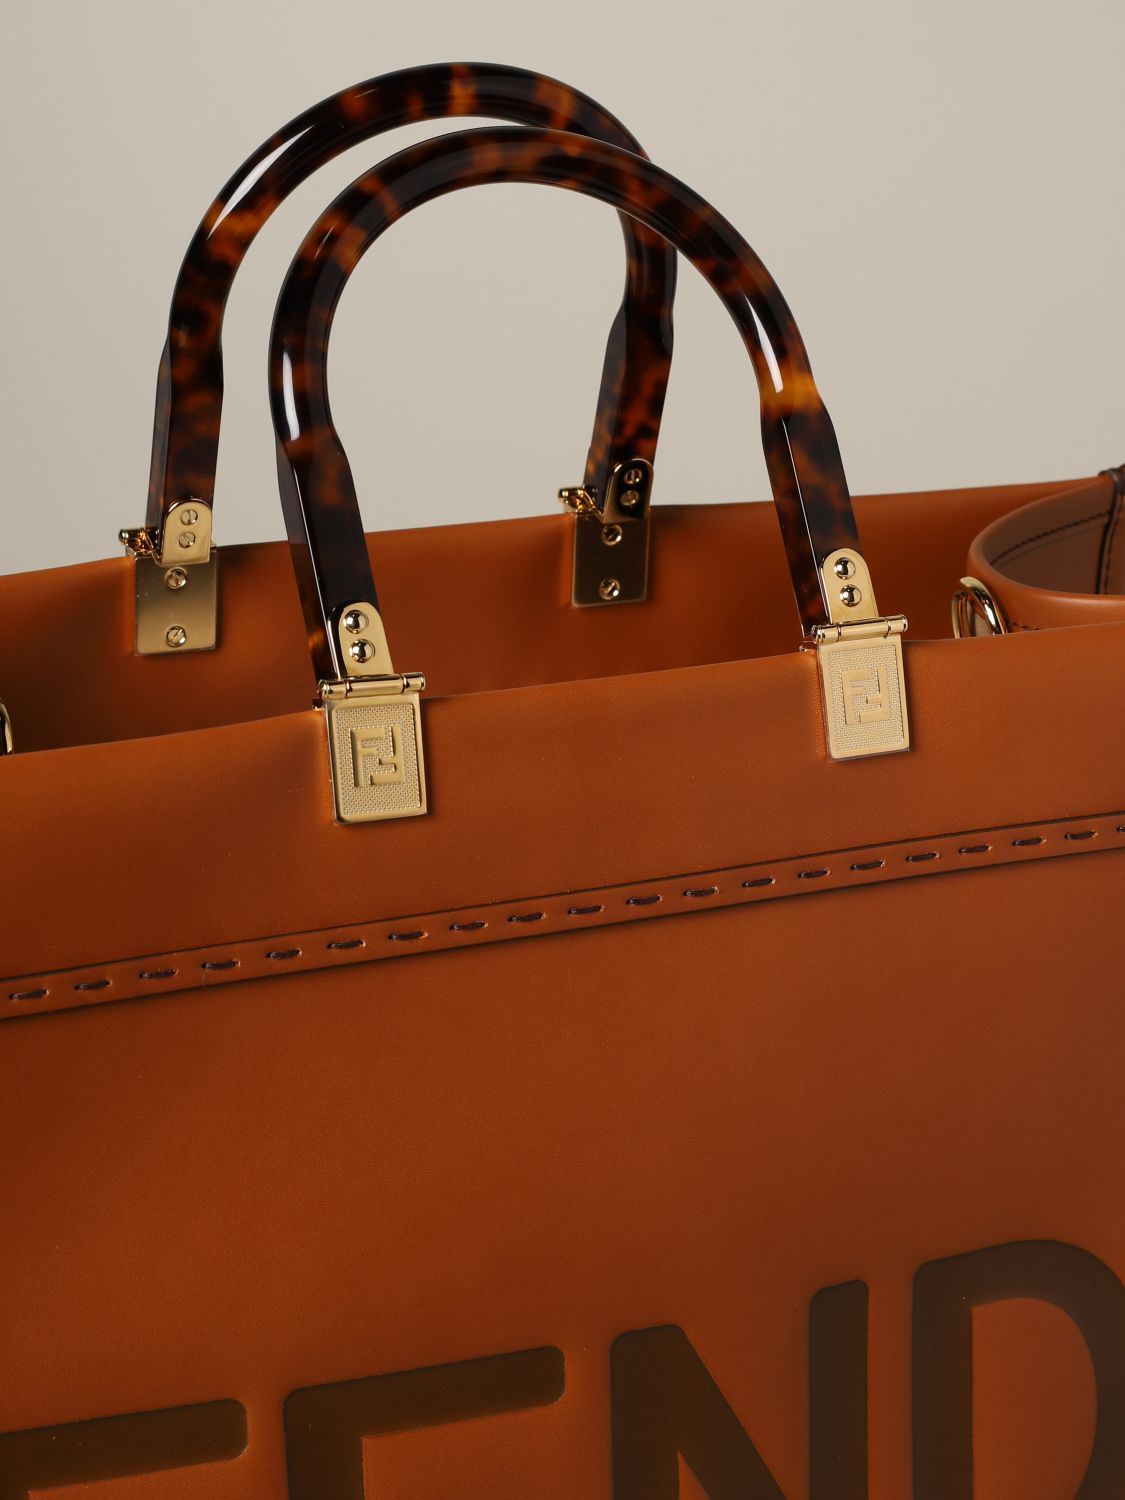 FENDI: Sunshine shopping bag in leather with logo | Tote Bags Fendi